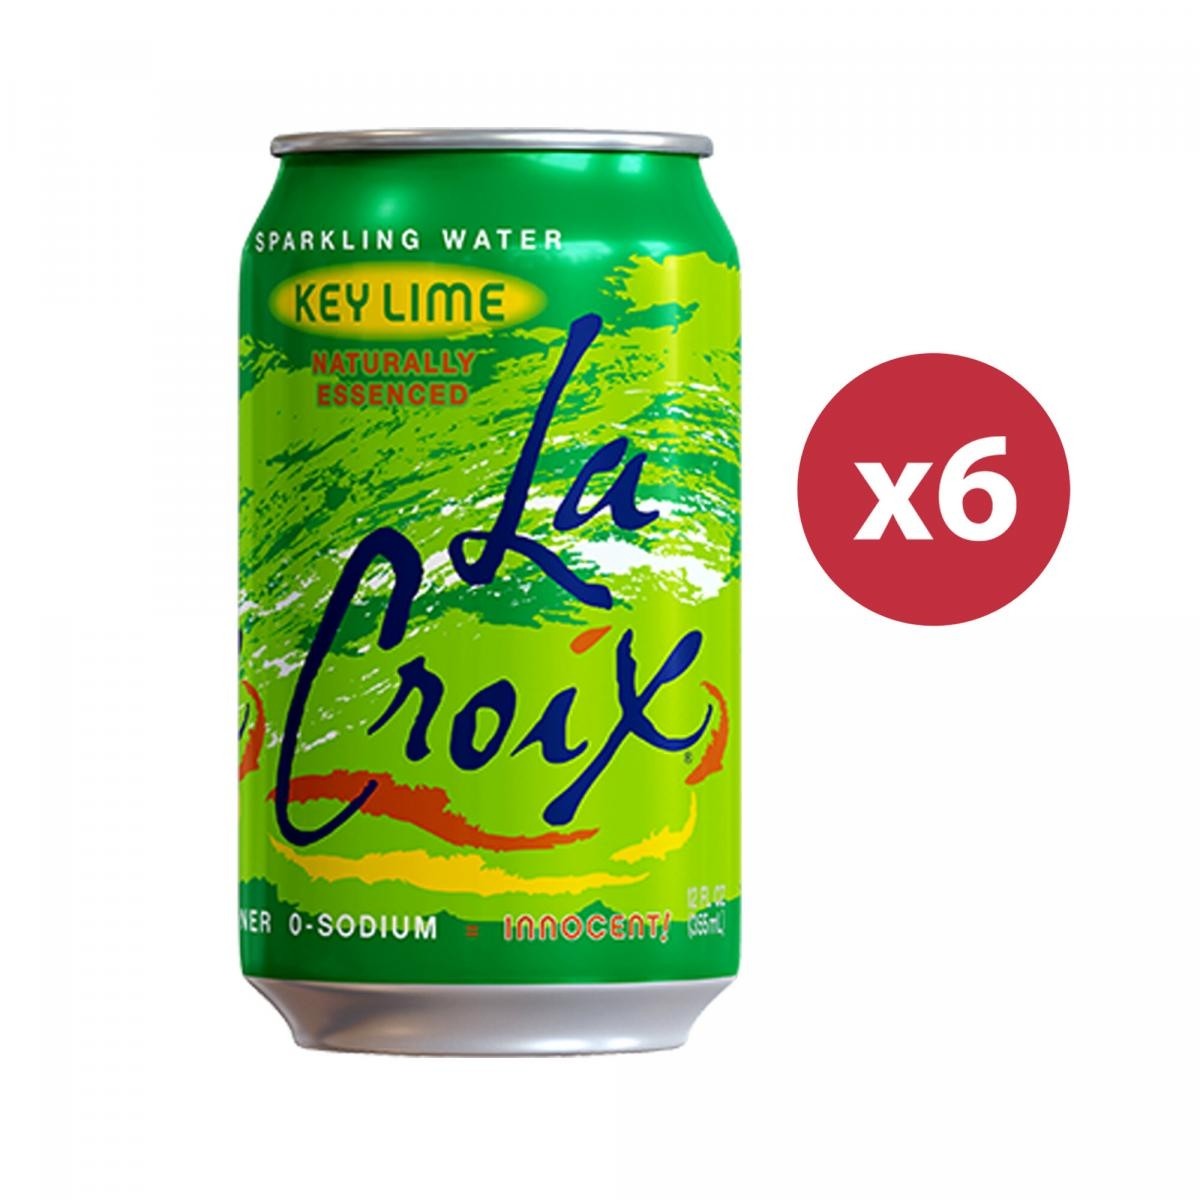 Lacroix - 雨林青檸味天然蘇打水 (六罐裝) Key Lime Naturally Essenced Sparkling Water (6 cans)